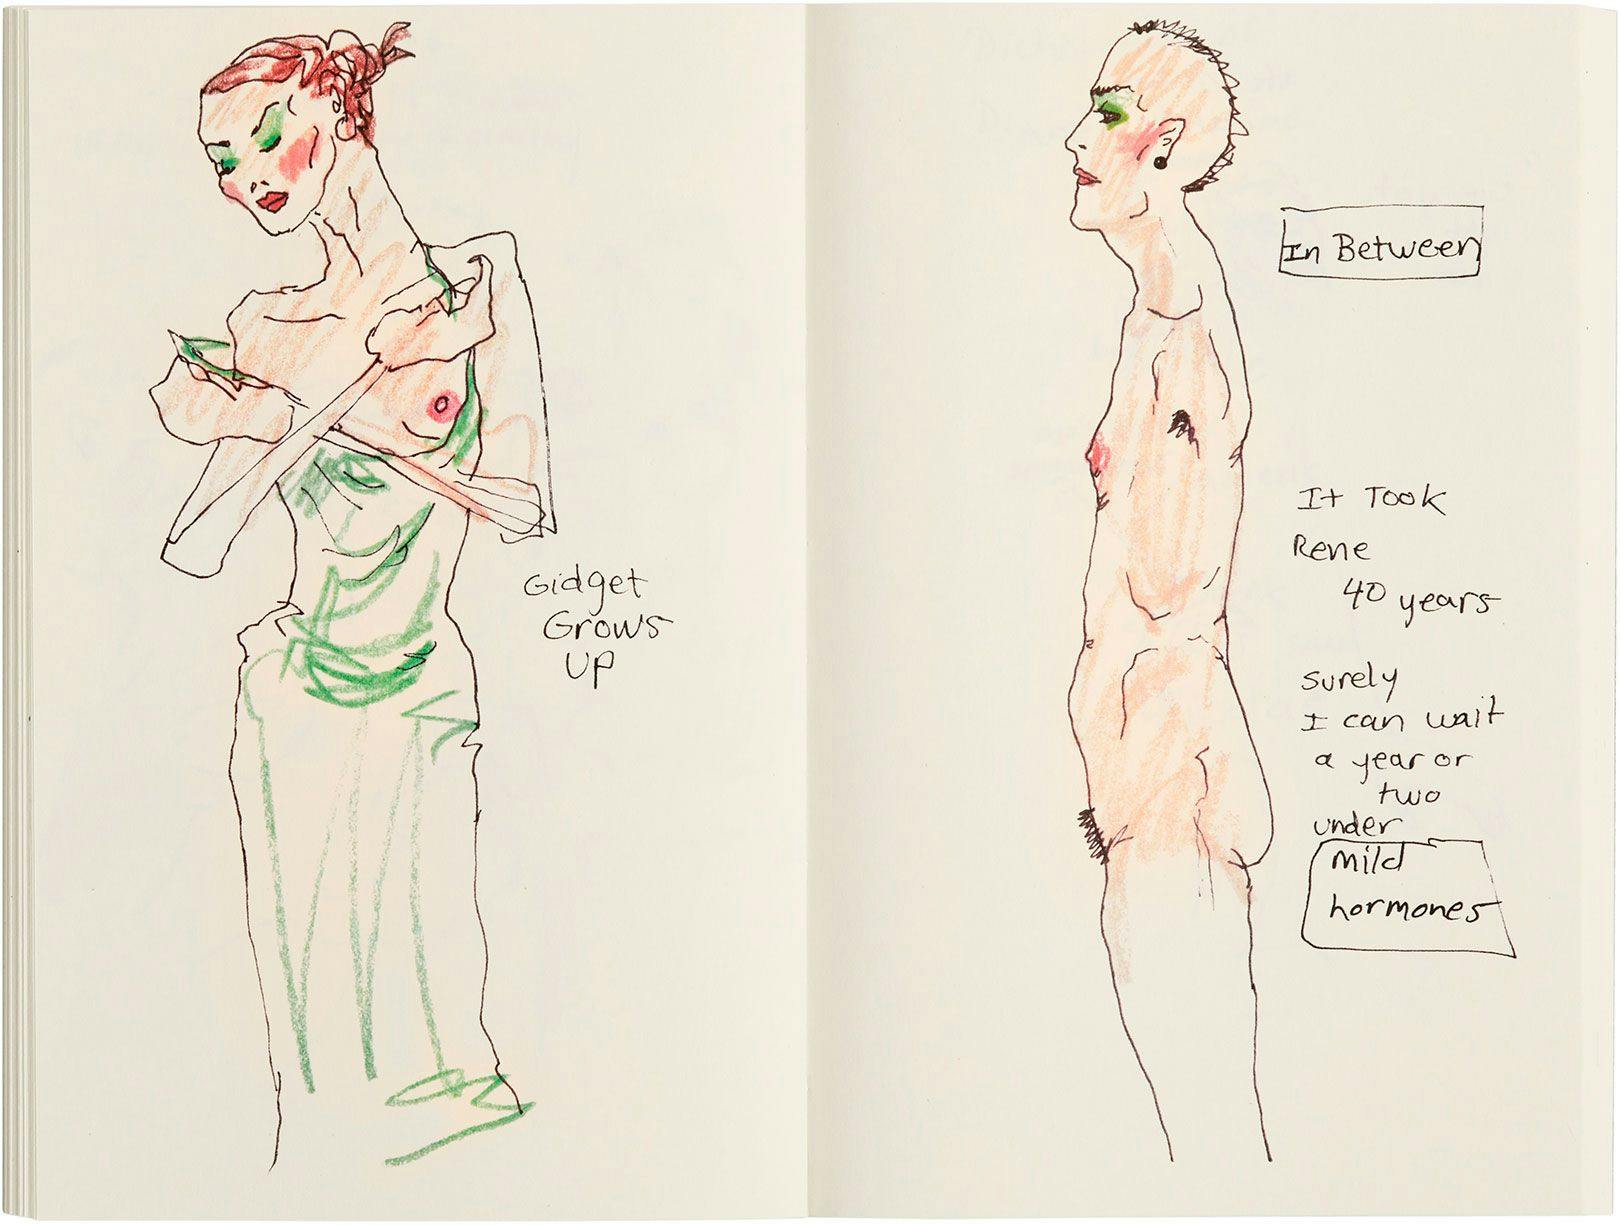 Greer Lankton: Sketchbook, September 1977 spread